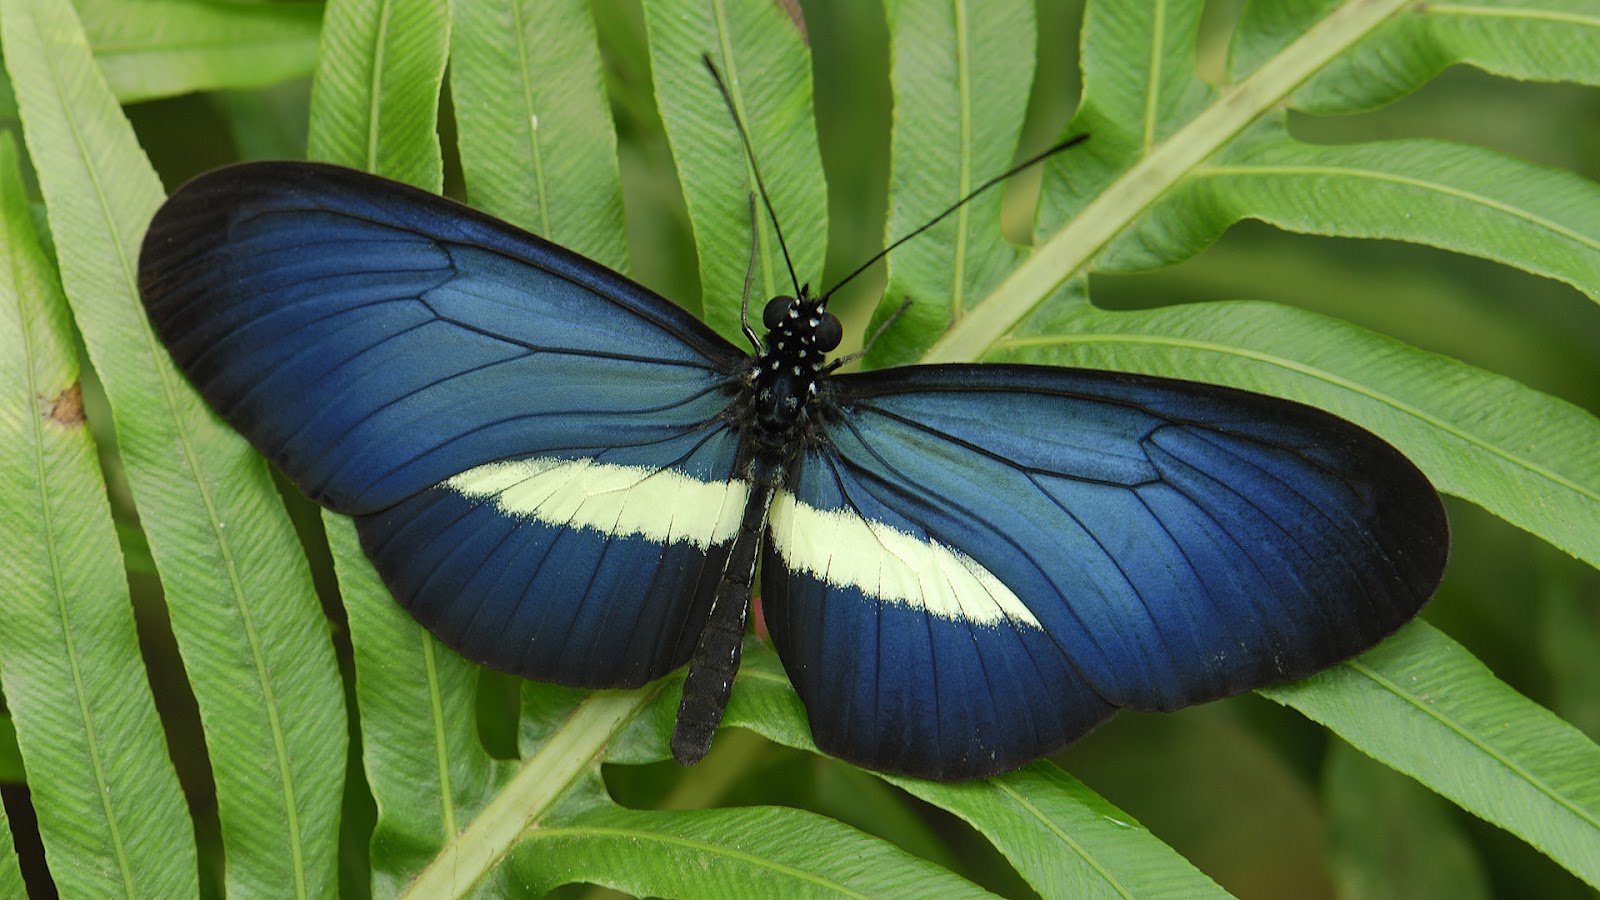 HD animal wallpaper of a blue butterfly on a green leaf Butterfly